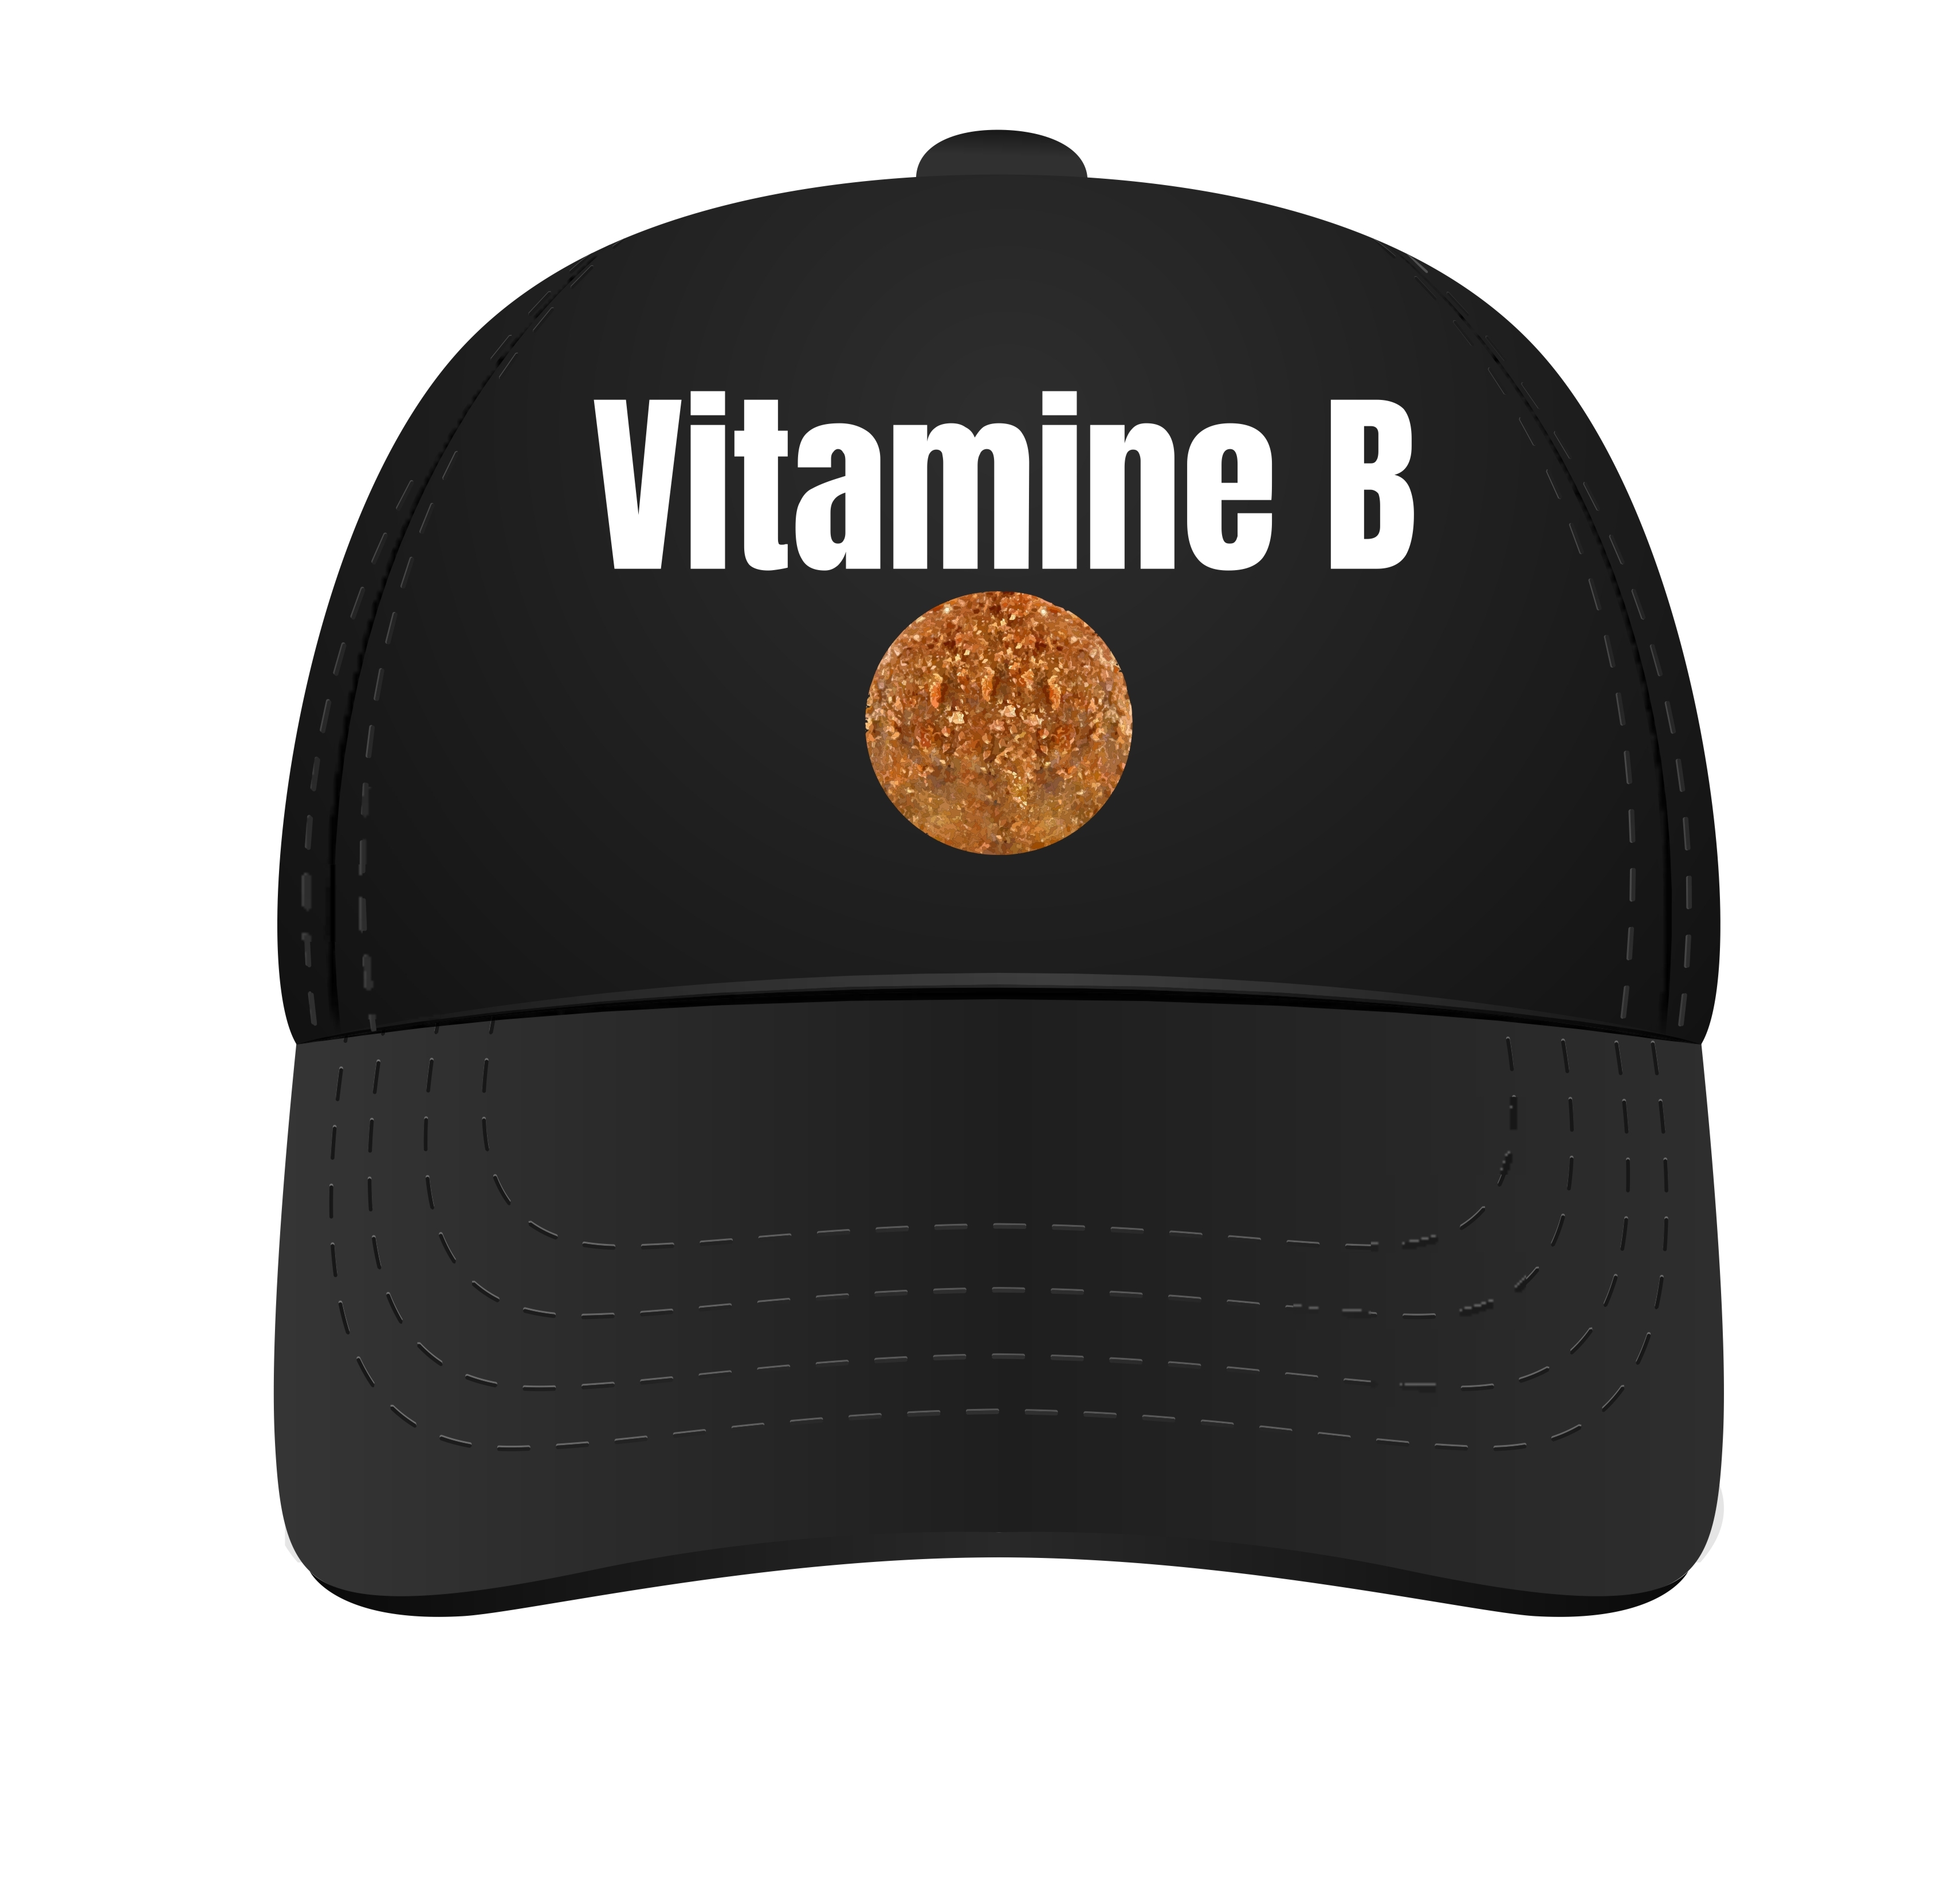 Vitamine B petje snack, de bitterbal!